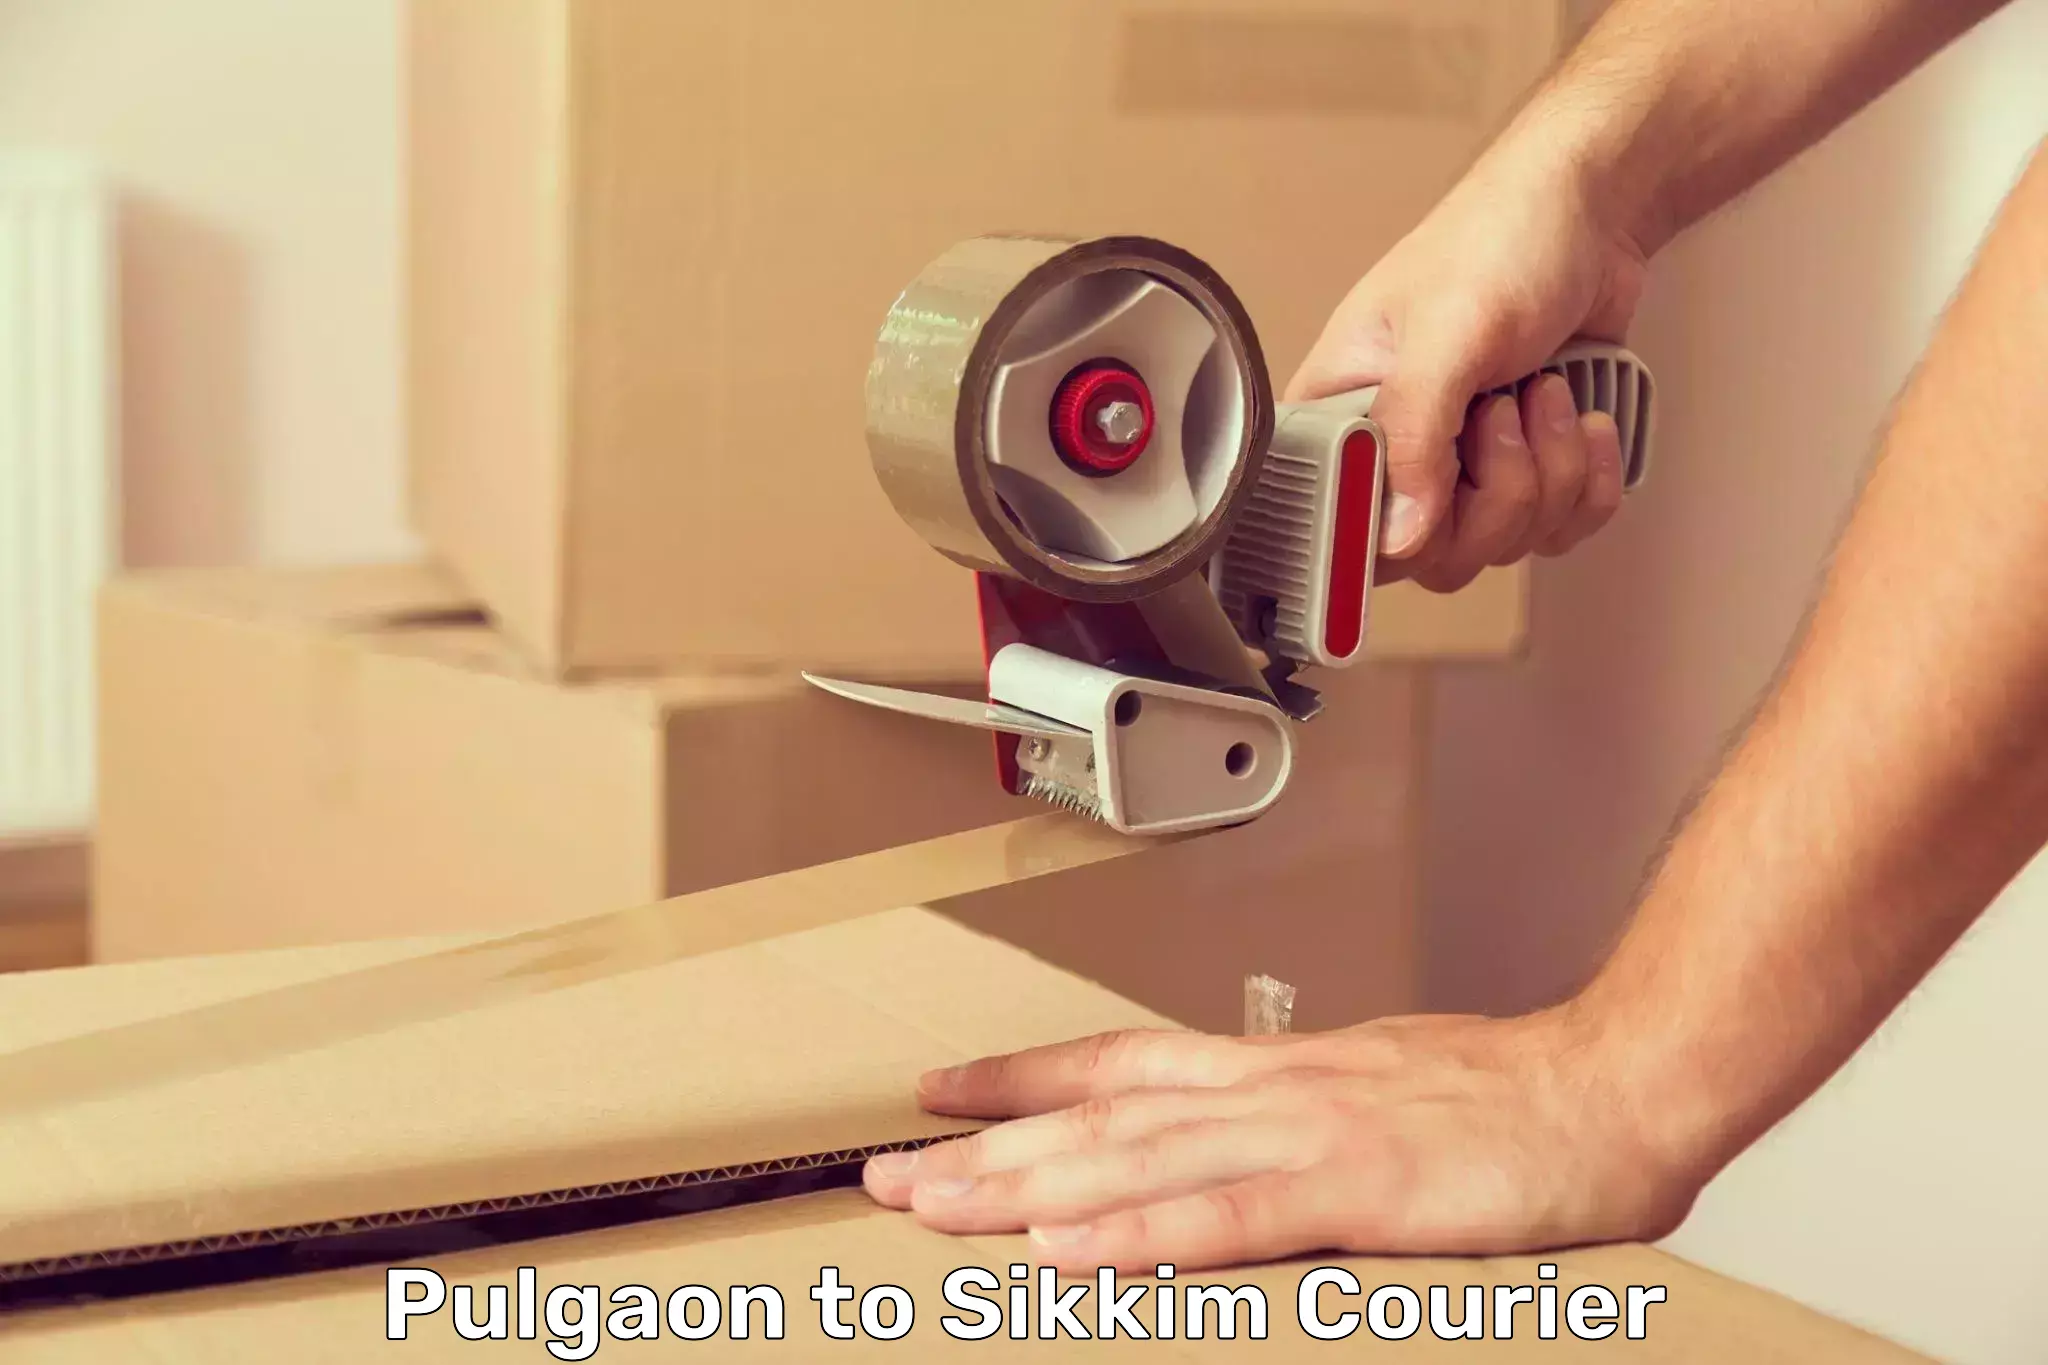 International parcel service Pulgaon to Pelling